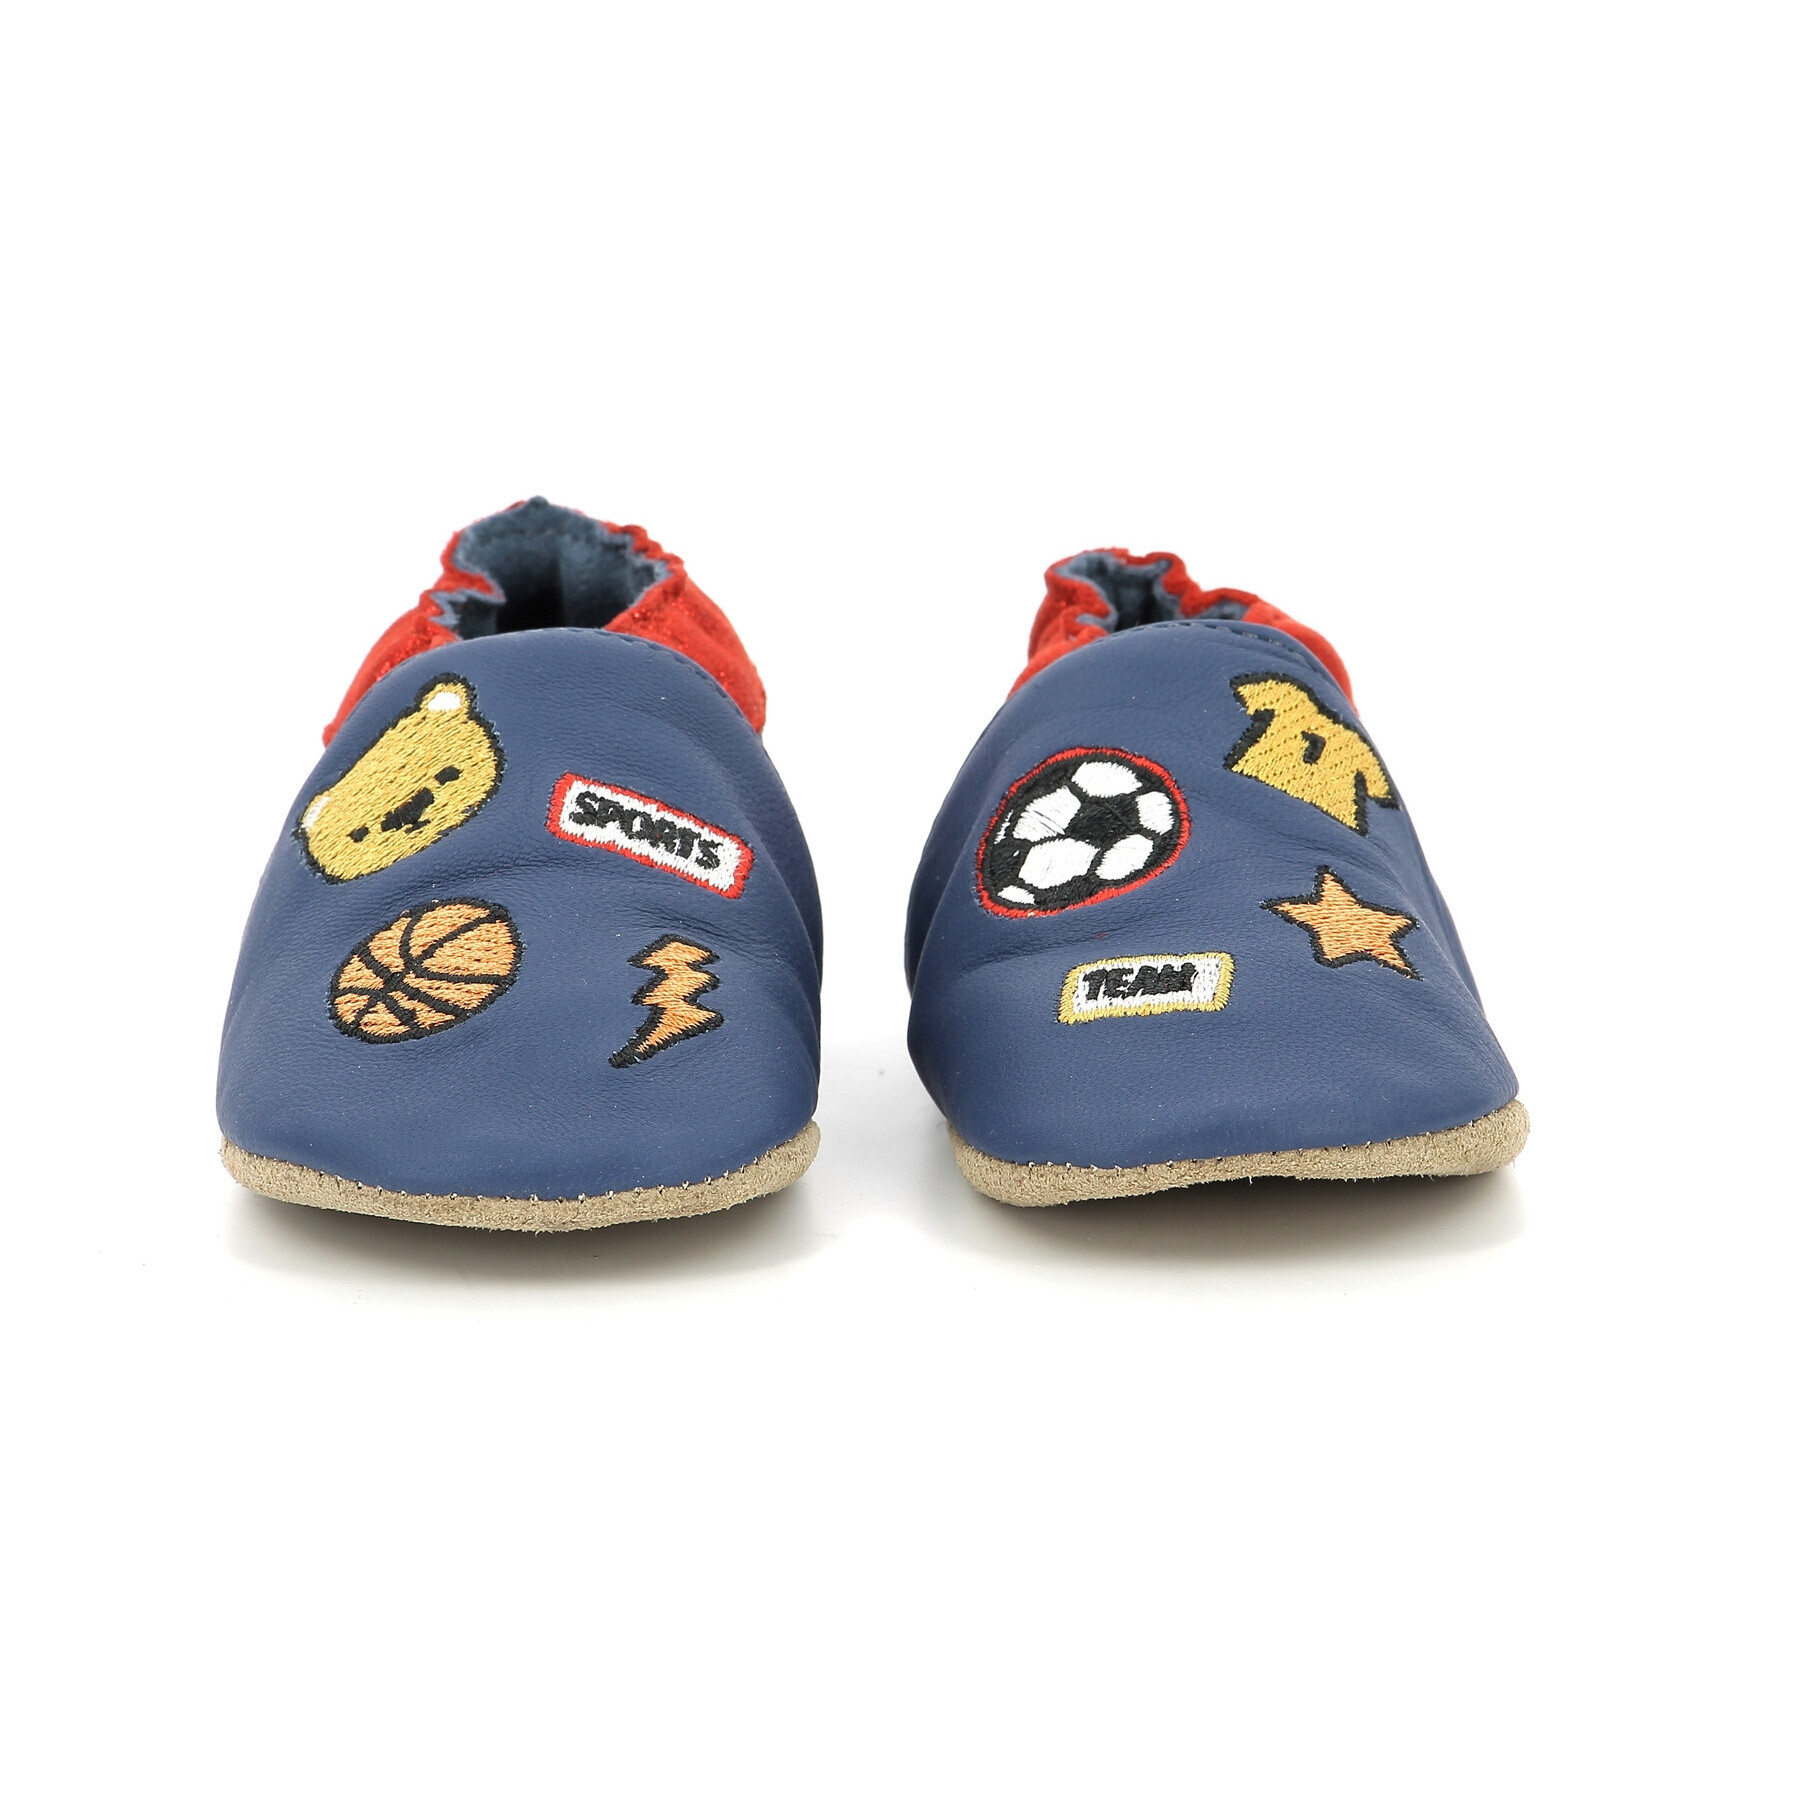 Baby boy slippers Robeez Patch Sports